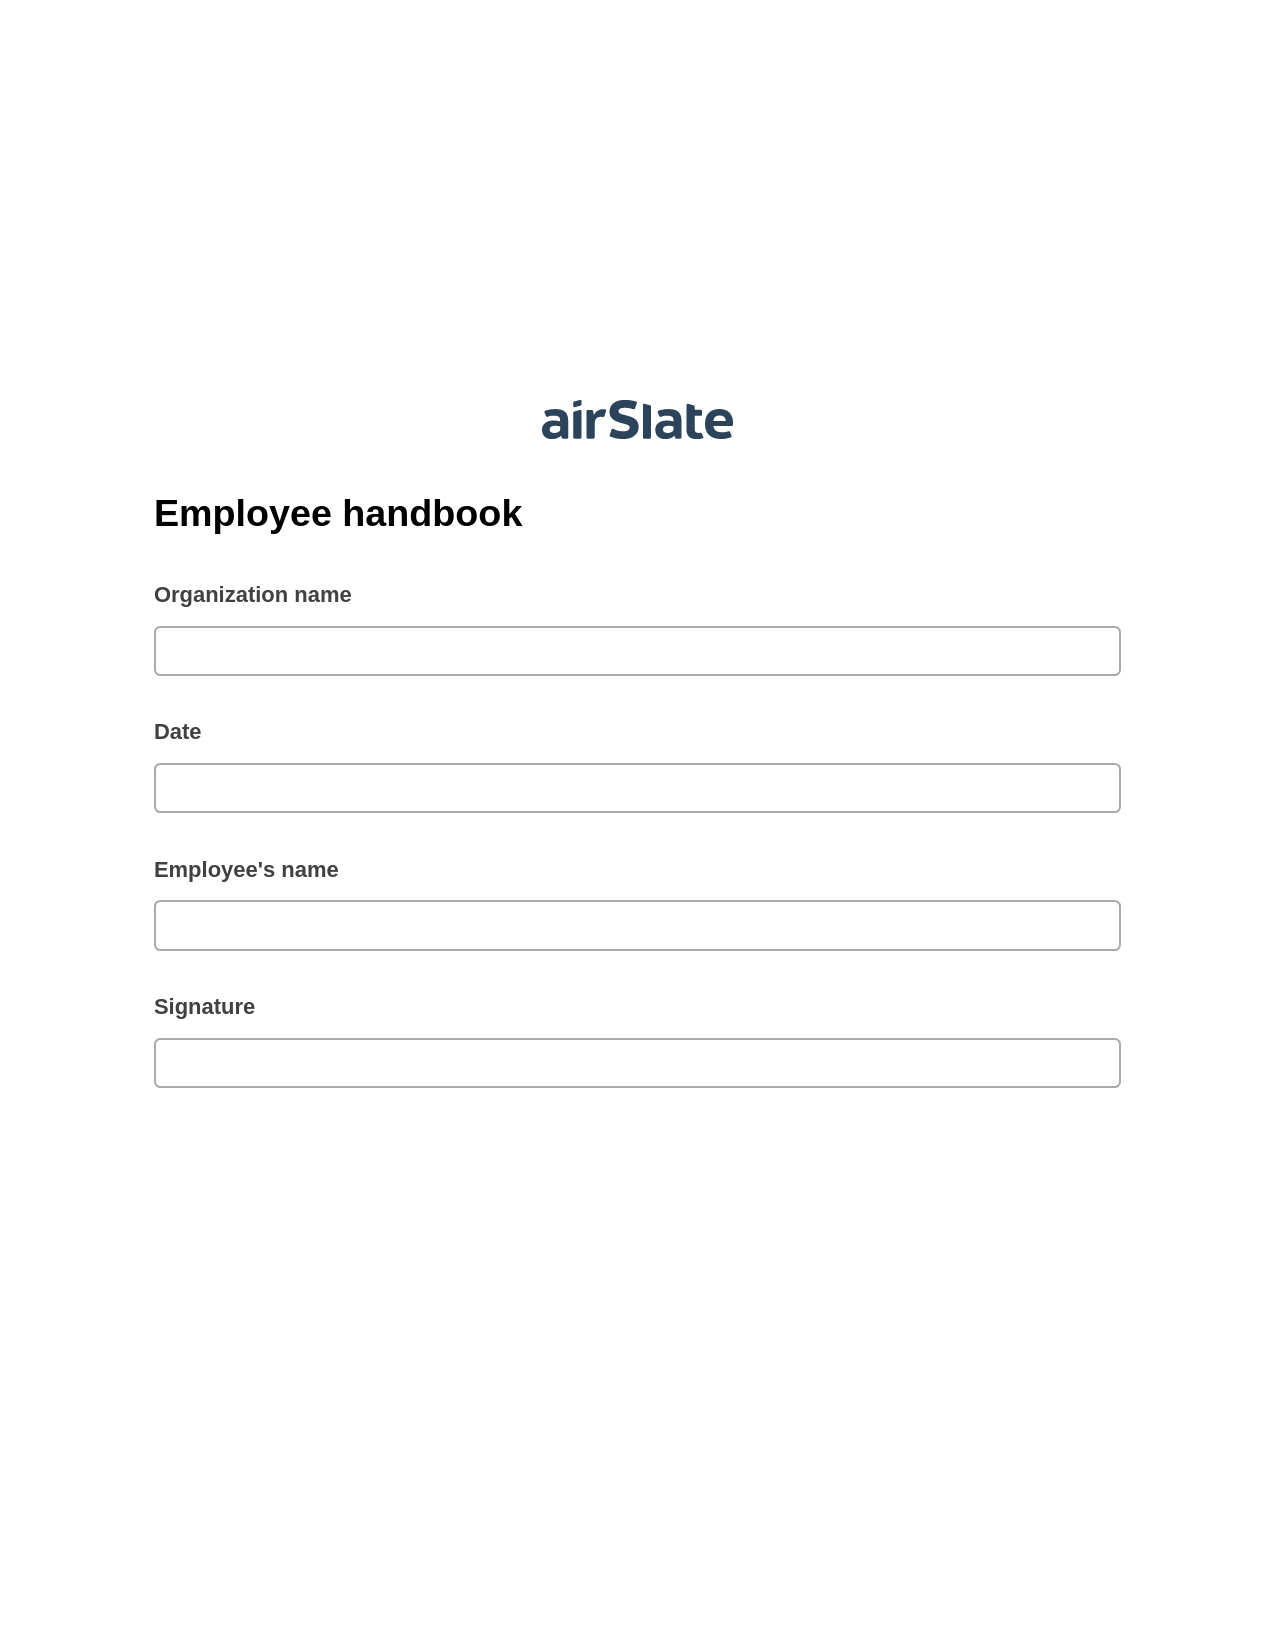 Multirole Employee handbook Pre-fill from Google Sheets Bot, Hide Signatures Bot, Export to Salesforce Bot